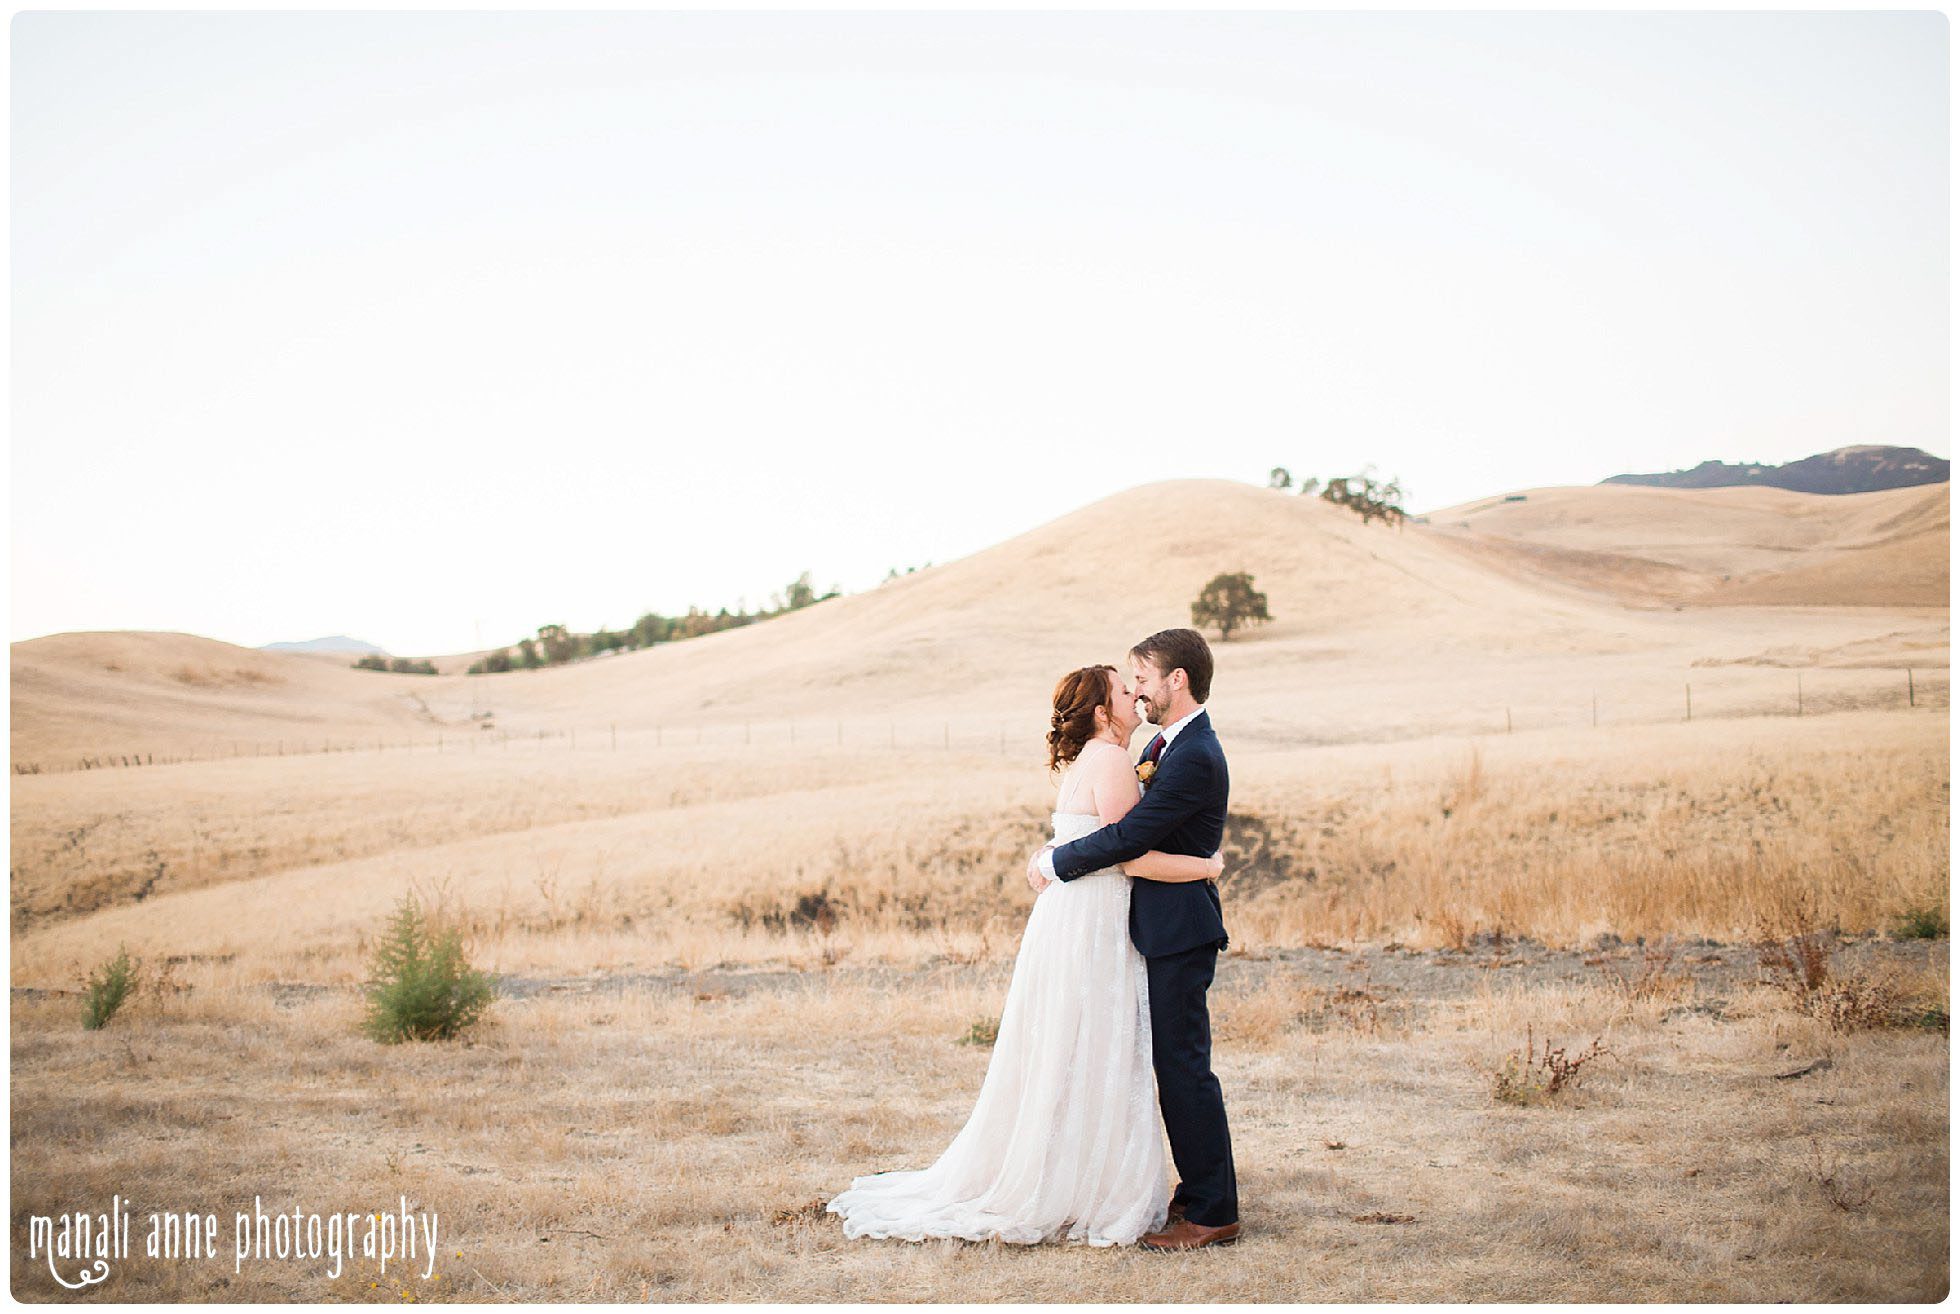 Reinstein Ranch Livermore Wedding, Bay Area Wedding Photos, East Bay Wedding Locations, Wedding Reception, bride and groom photos